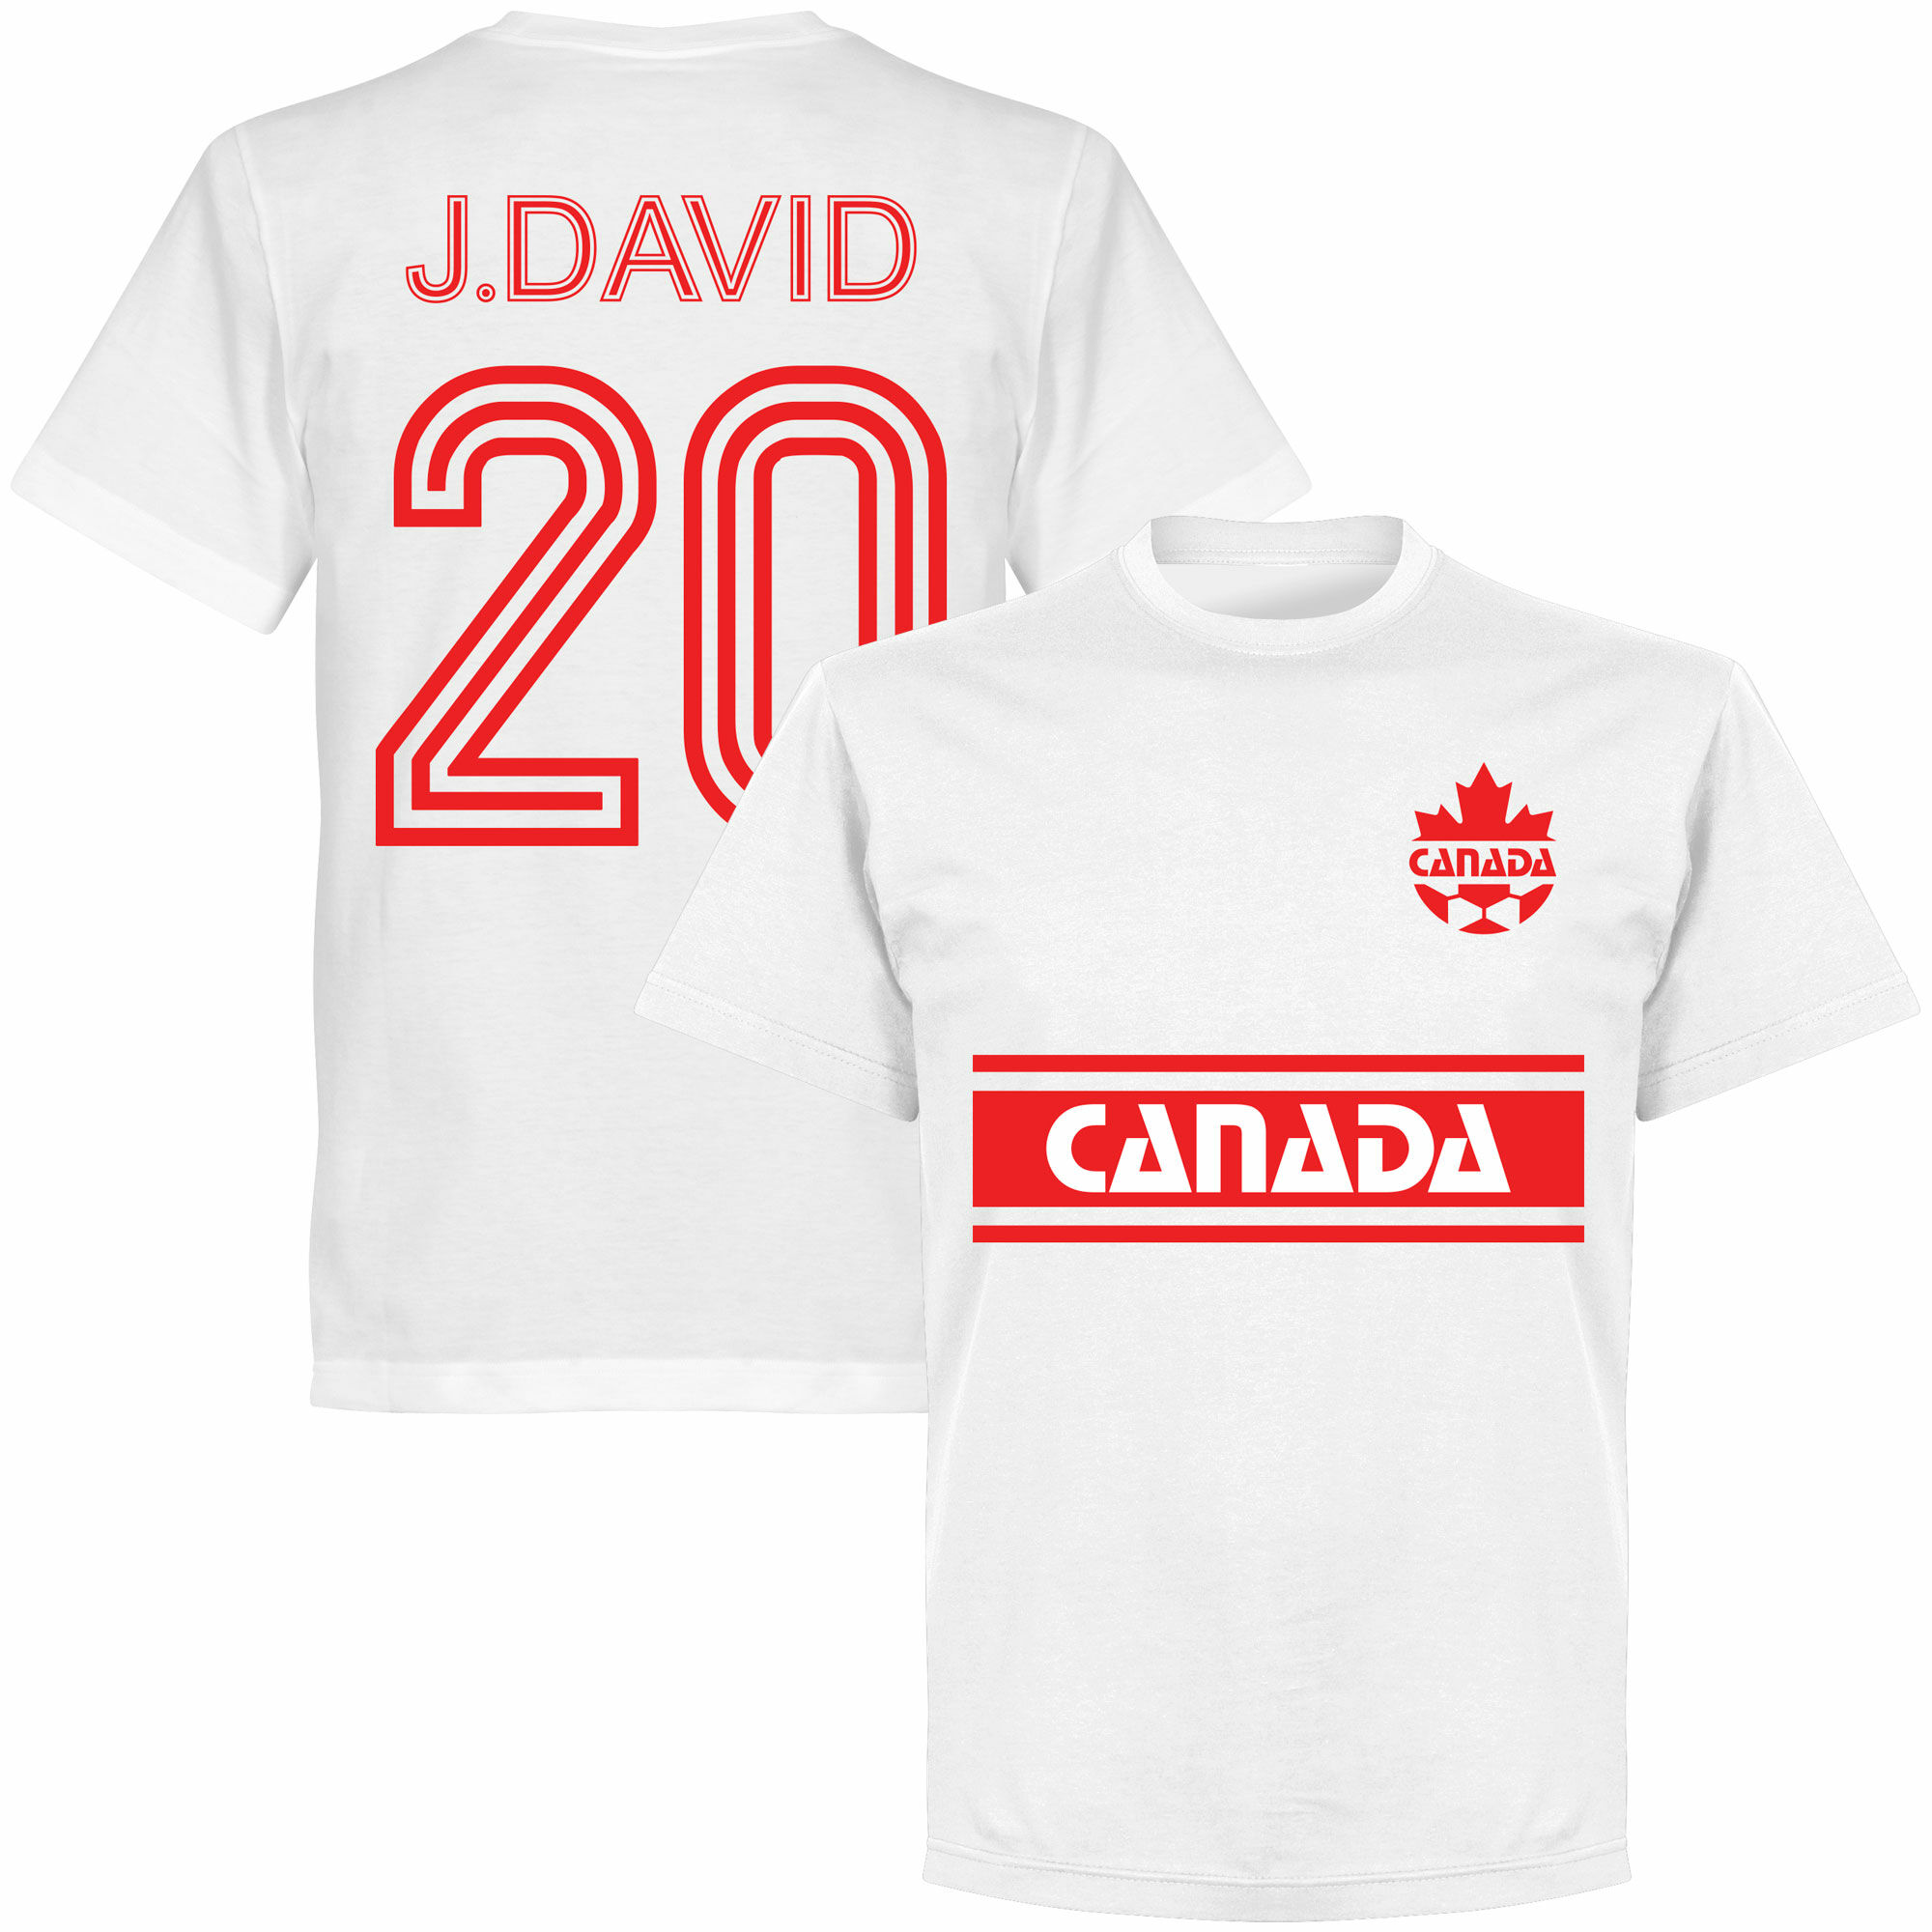 Kanada - Tričko - bílé, číslo 20, Jonathan David, retrostyl